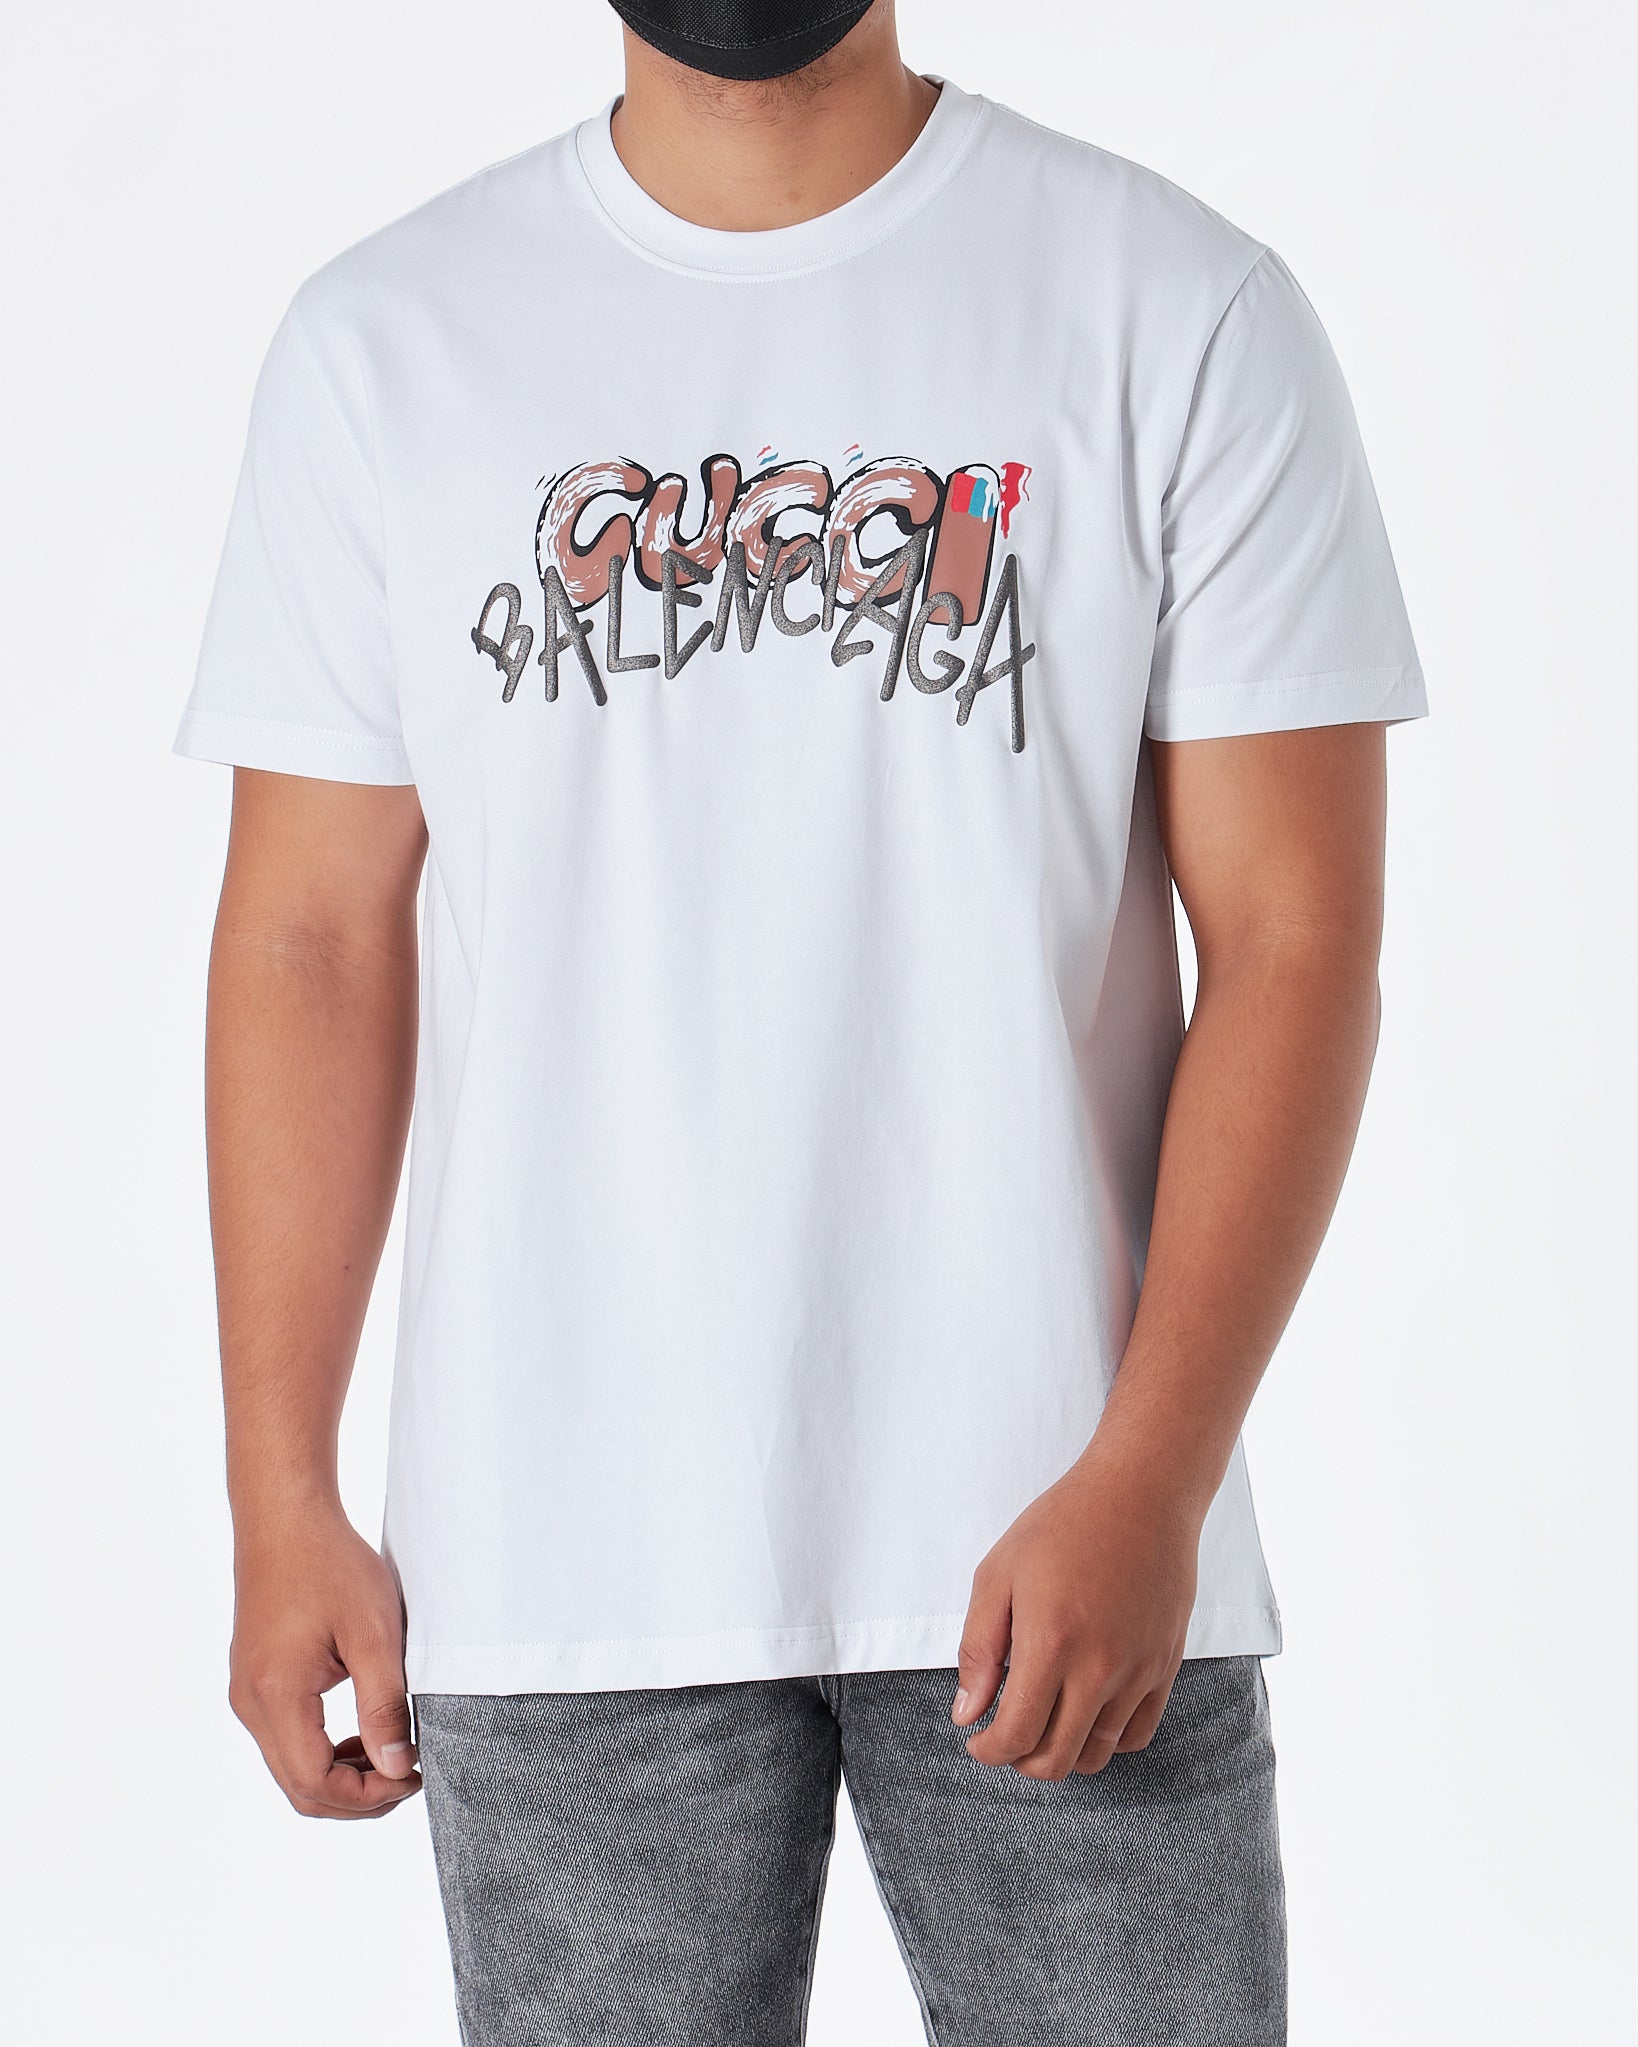 MOI OUTFIT-Graffiti Logo Printed Men T-Shirt 18.90